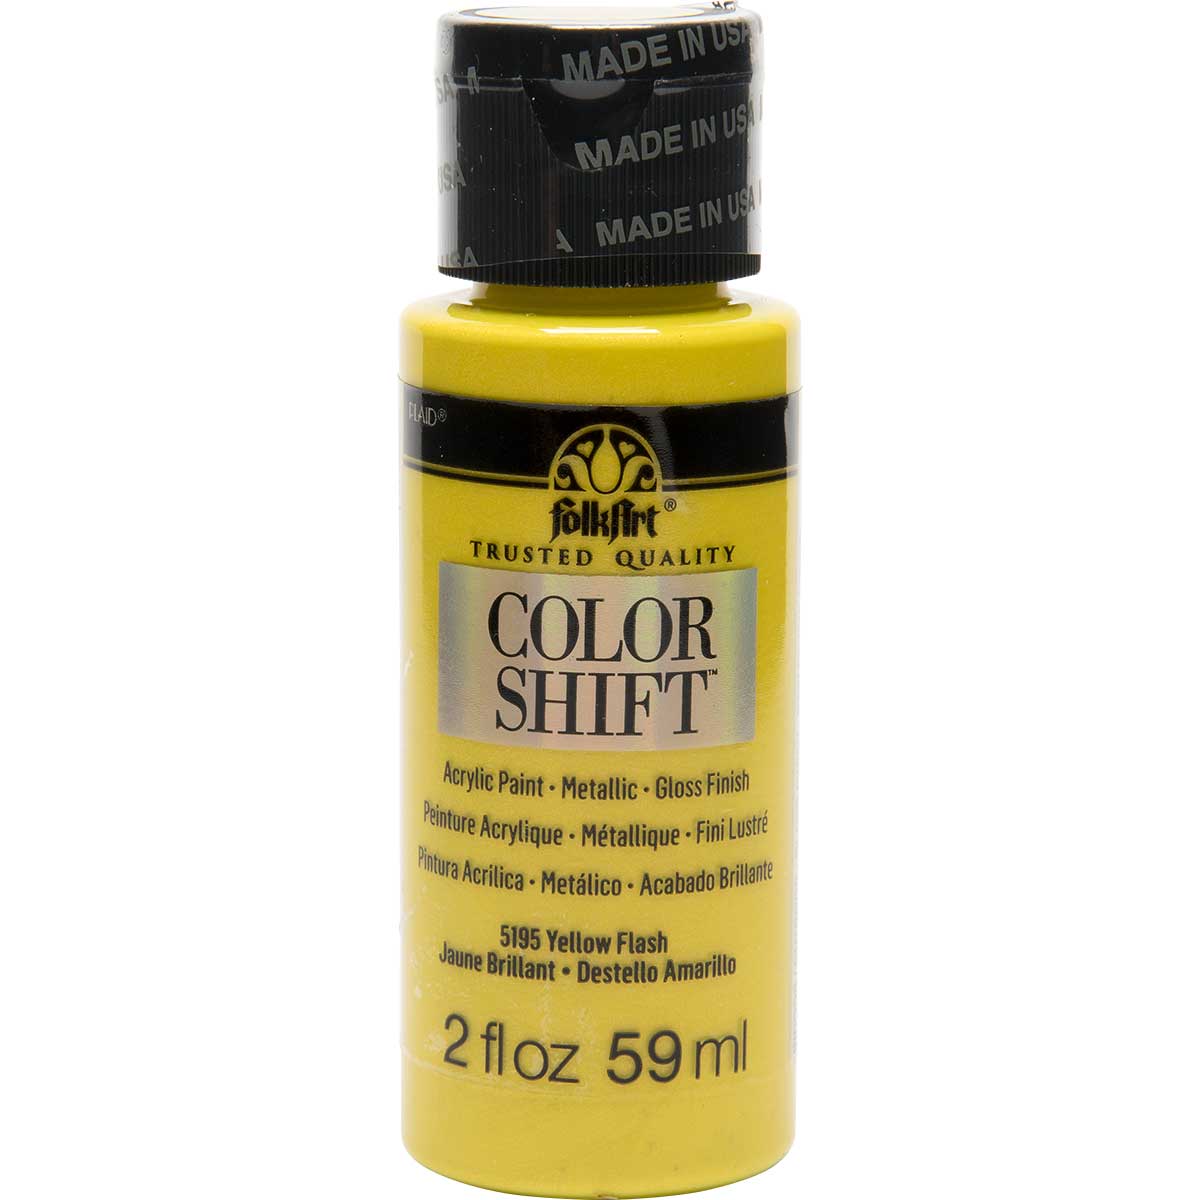 FolkArt ® Color Shift™ Acrylic Paint - Yellow Flash, 2 oz. - 5195